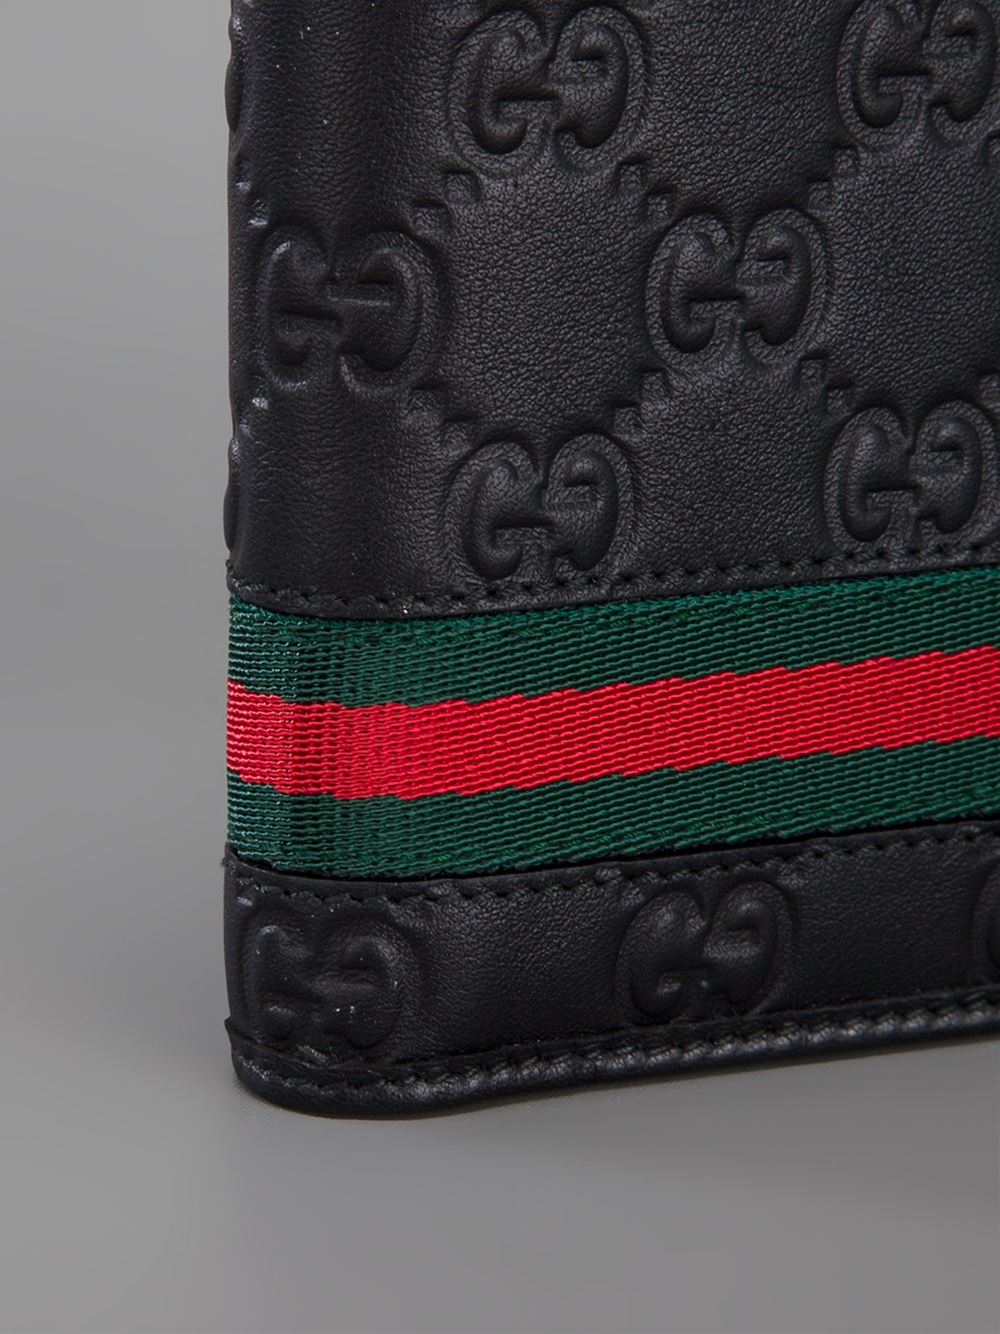 Gucci Monogram Embossed Wallet in Black for Men - Lyst